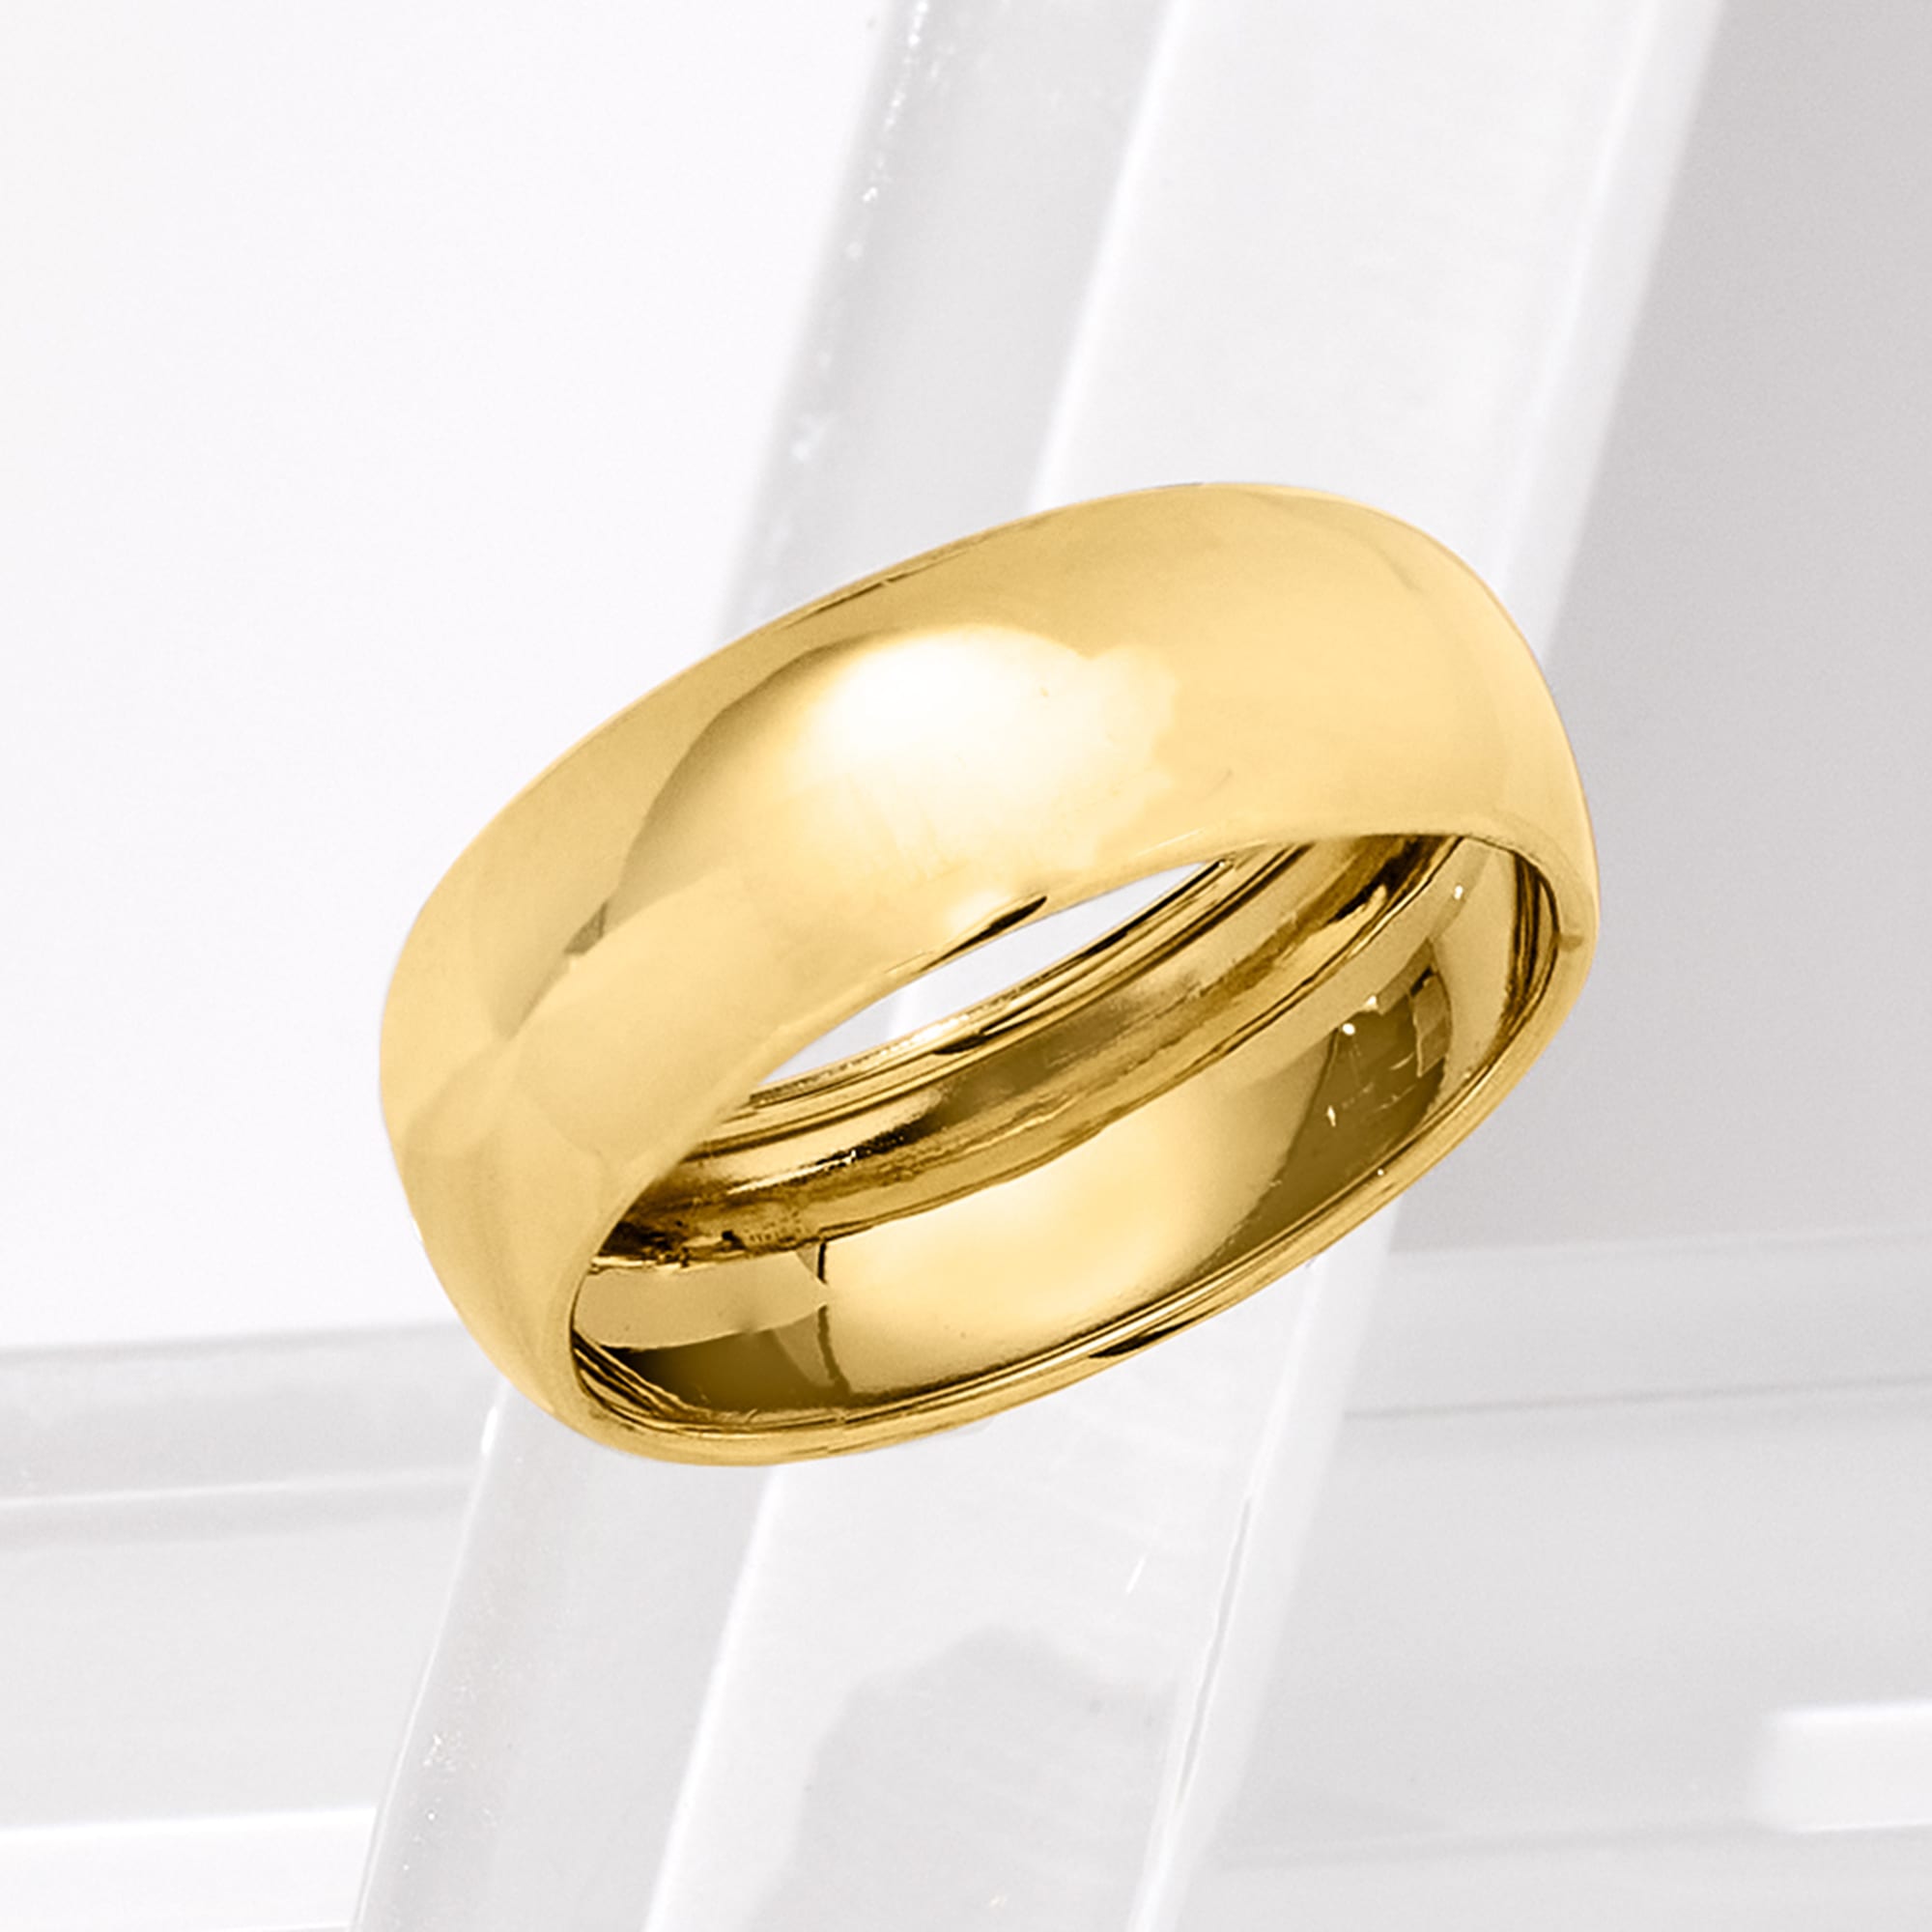 Ross-Simons - Italian 14kt Yellow Gold Bow Ring Size 8